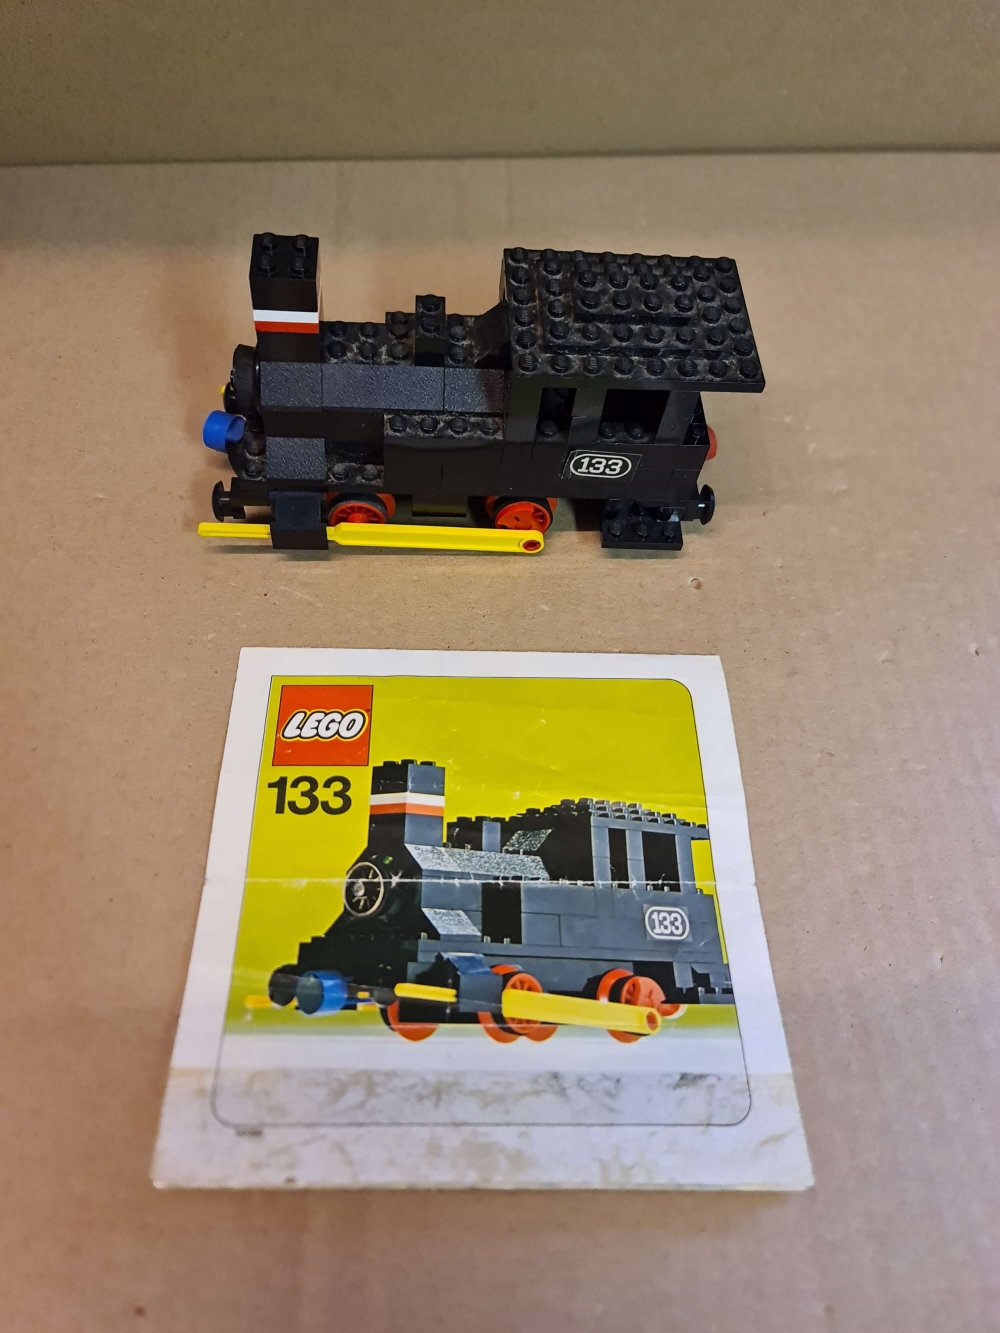 Sett 133 fra Lego Train : 4.5V serien.
Komplett med manual.